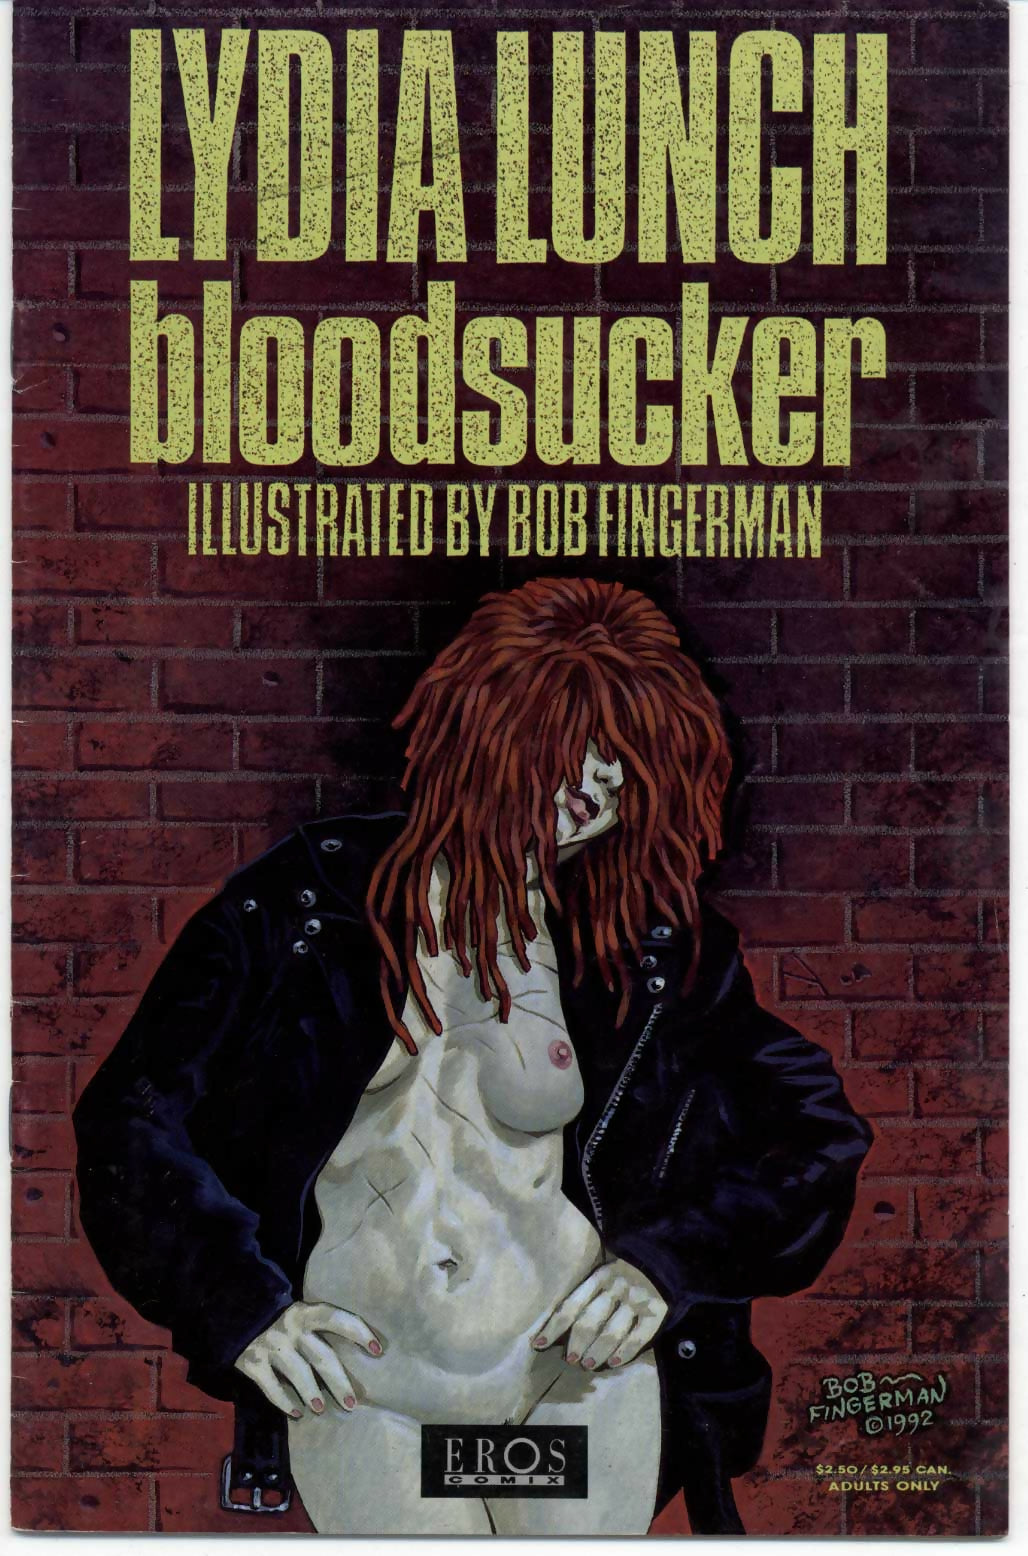 Bloodsucker #1 - comic - [Eros Comix 1992] excellent condition